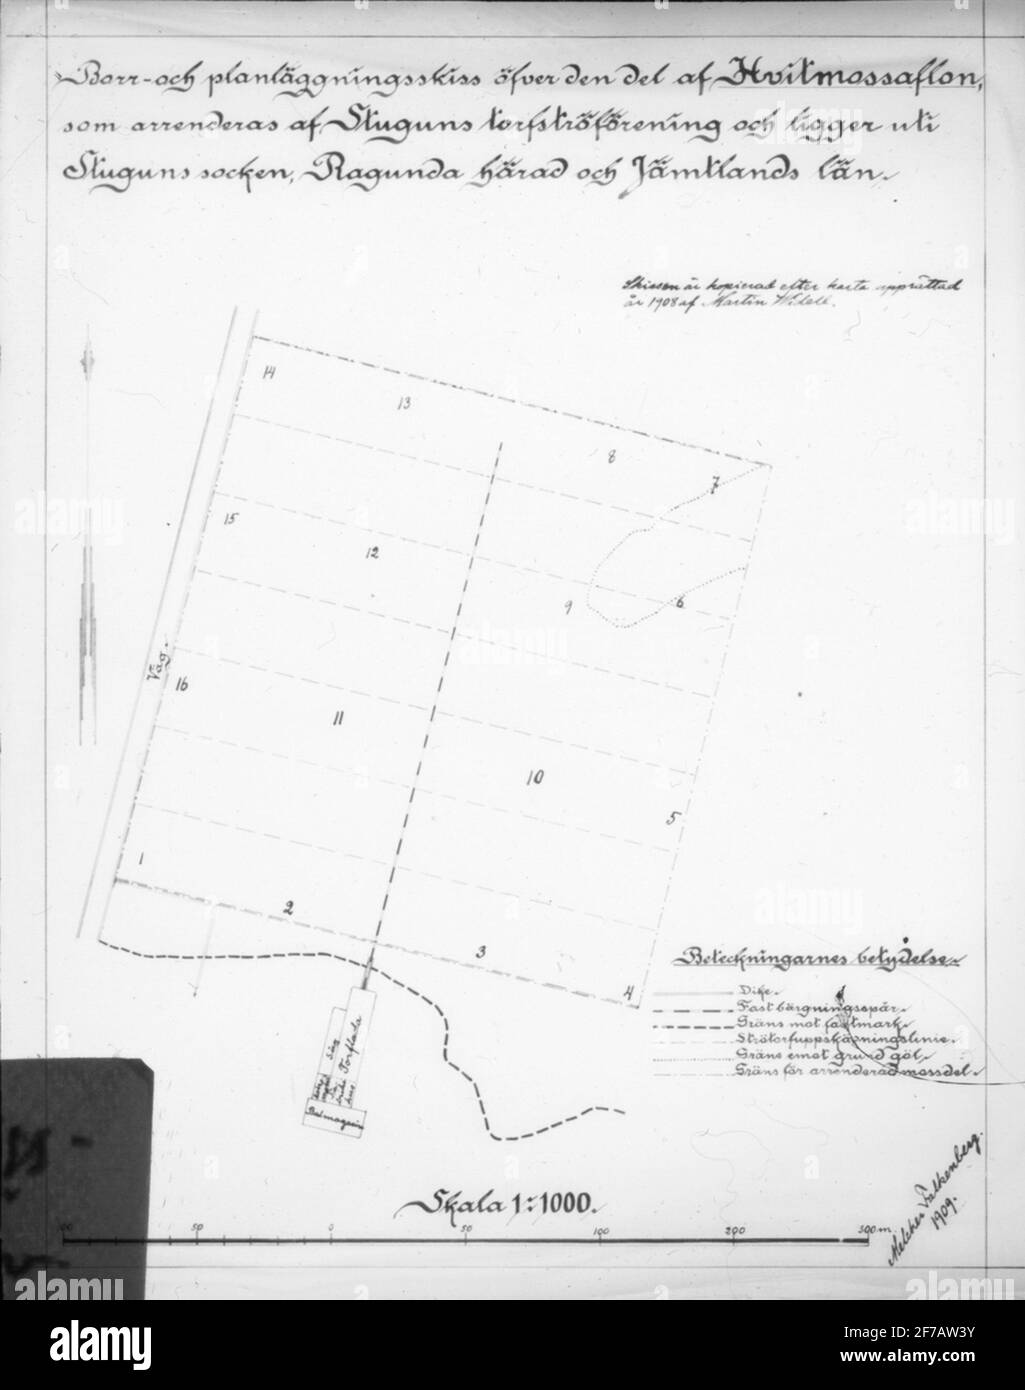 Skiopticone image. Drill and planning sketch over the Hvit moss flange leased by Stugun's Torftröförening and located Uti Stugun's parish, Ragunda Härad and Jämtland County. Stock Photo